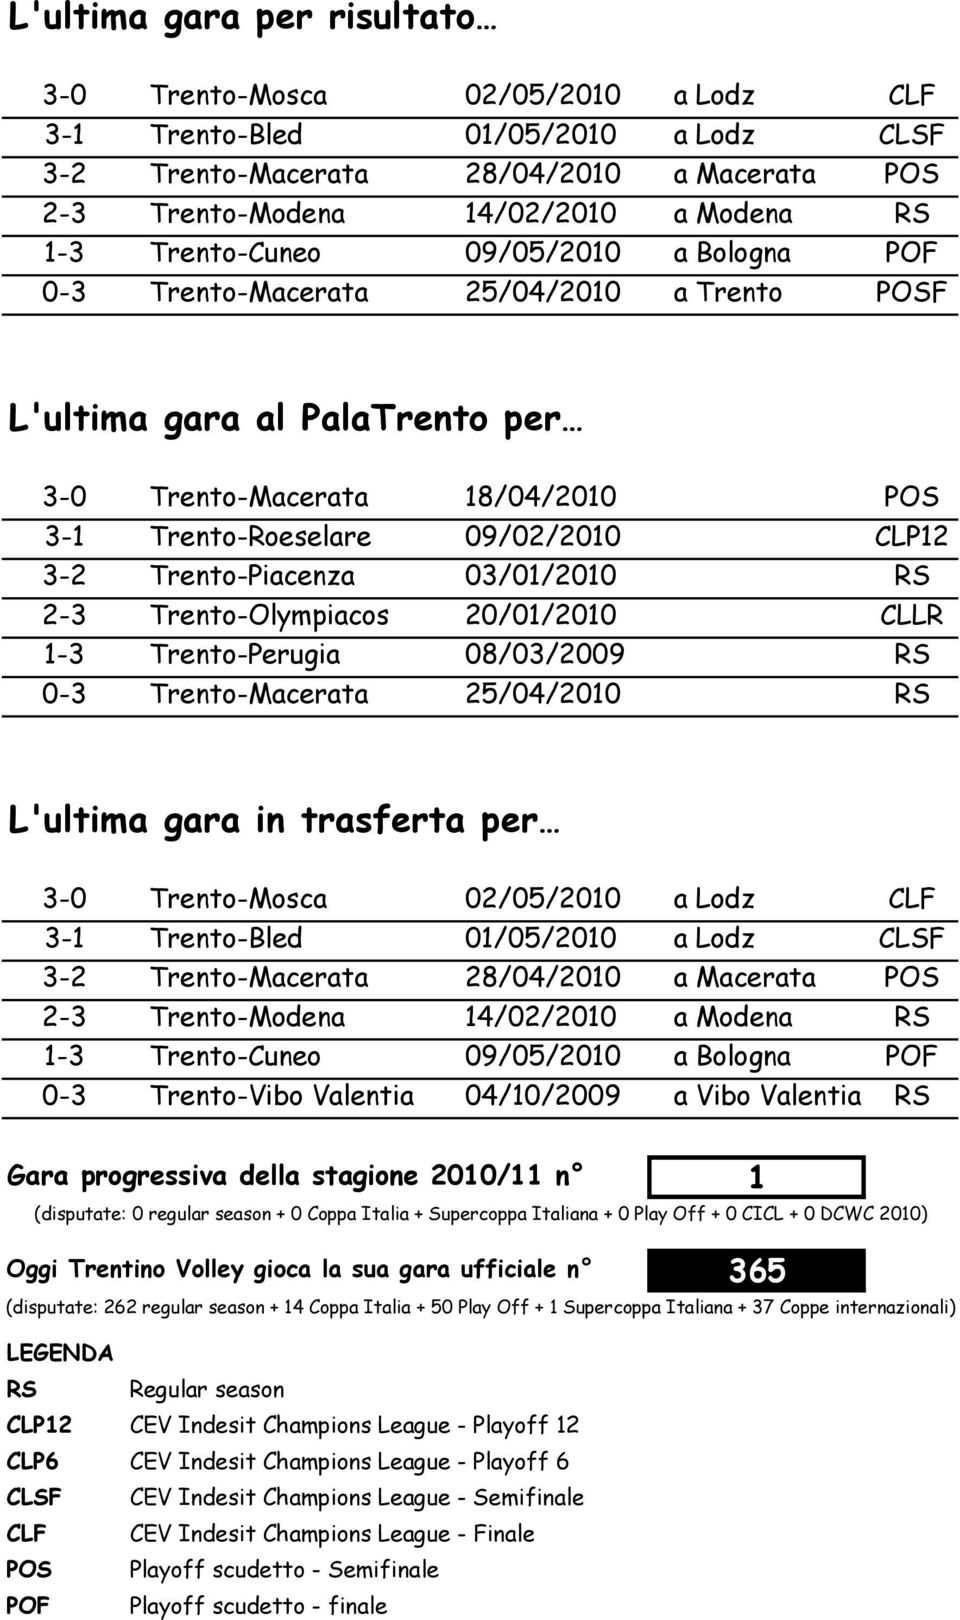 Trento-Piacenza 03/01/2010 RS 2-3 Trento-Olympiacos 20/01/2010 CLLR 1-3 Trento-Perugia 08/03/2009 RS 0-3 Trento-Macerata 25/04/2010 RS L'ultima gara in trasferta per 3-0 Trento-Mosca 02/05/2010 a